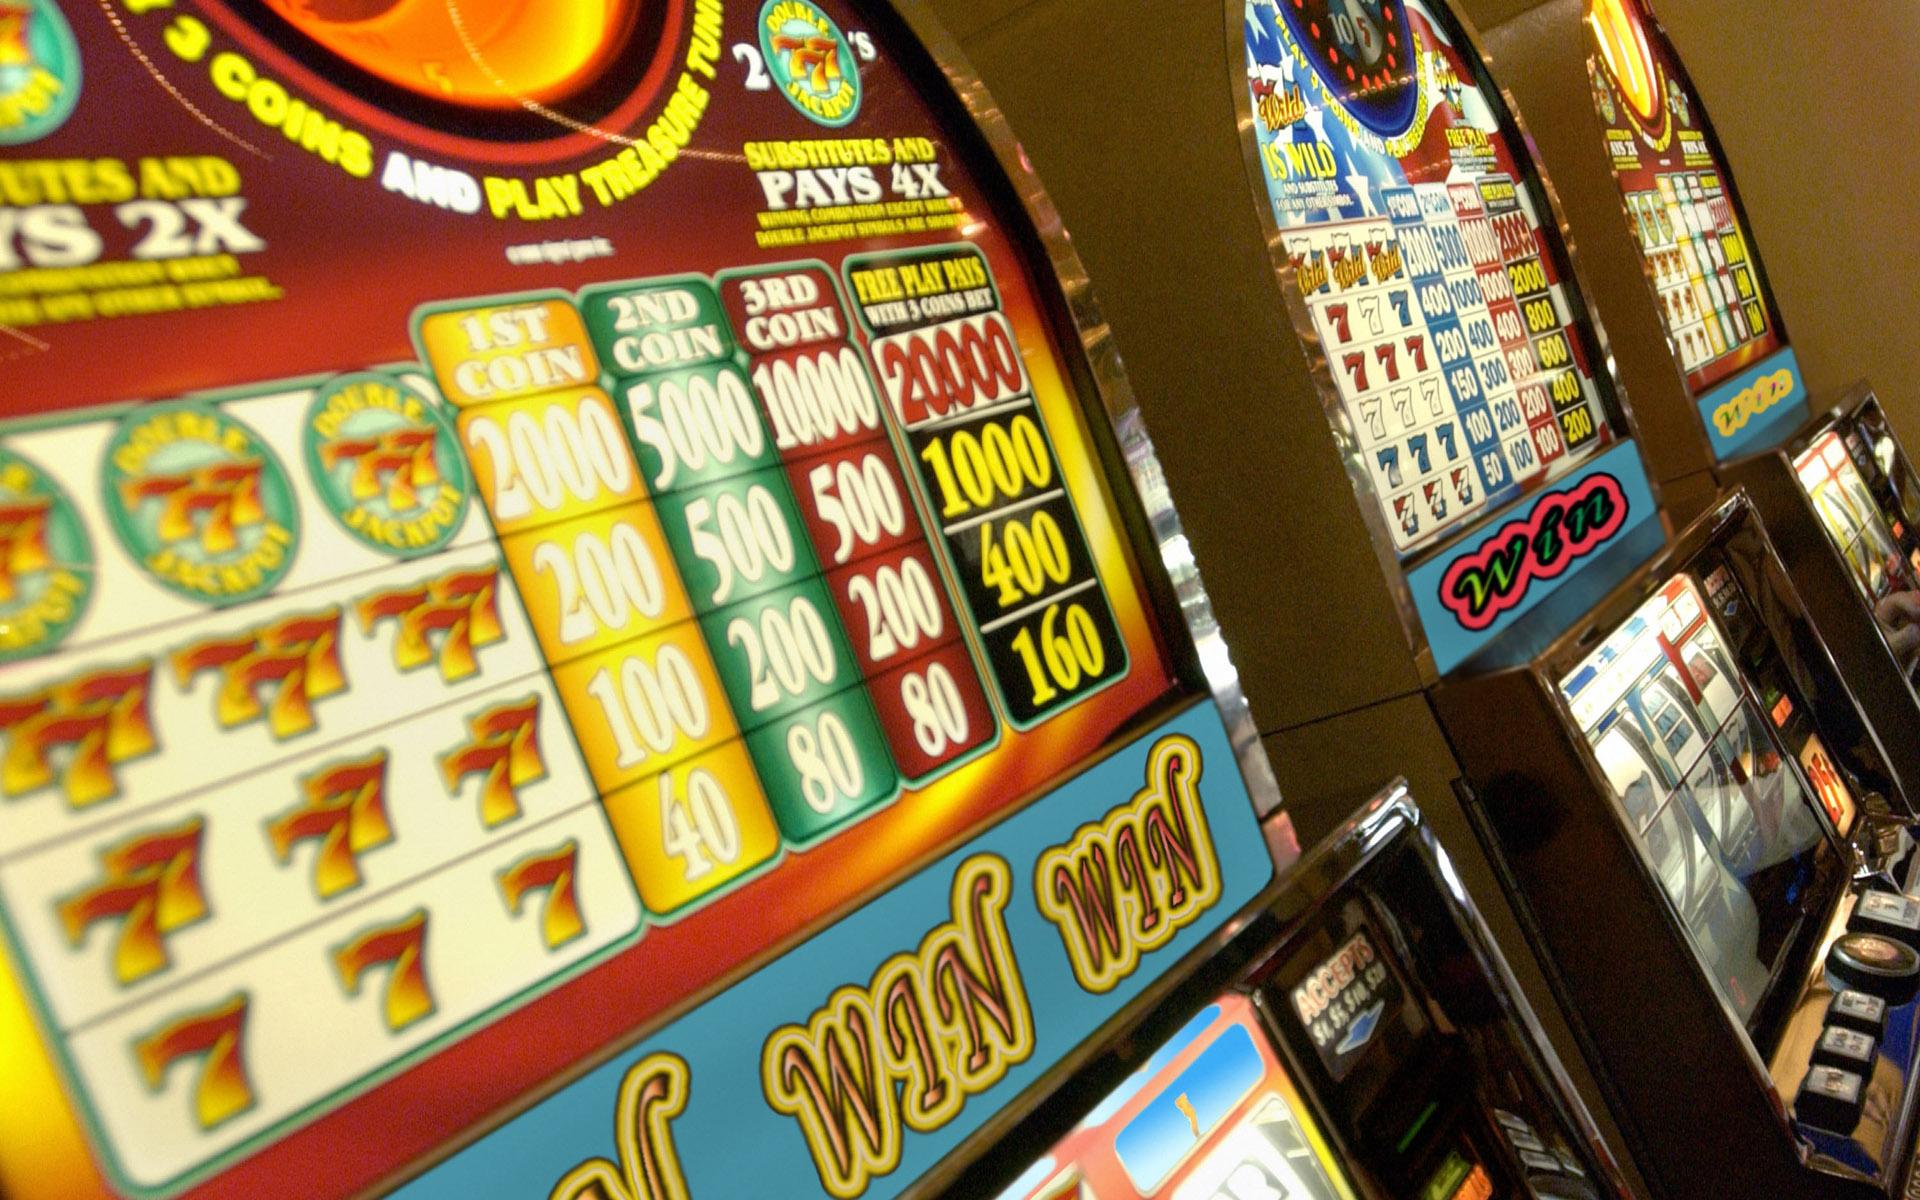 Las Vegas slots player wins $15.5M jackpot on Christmas Eve